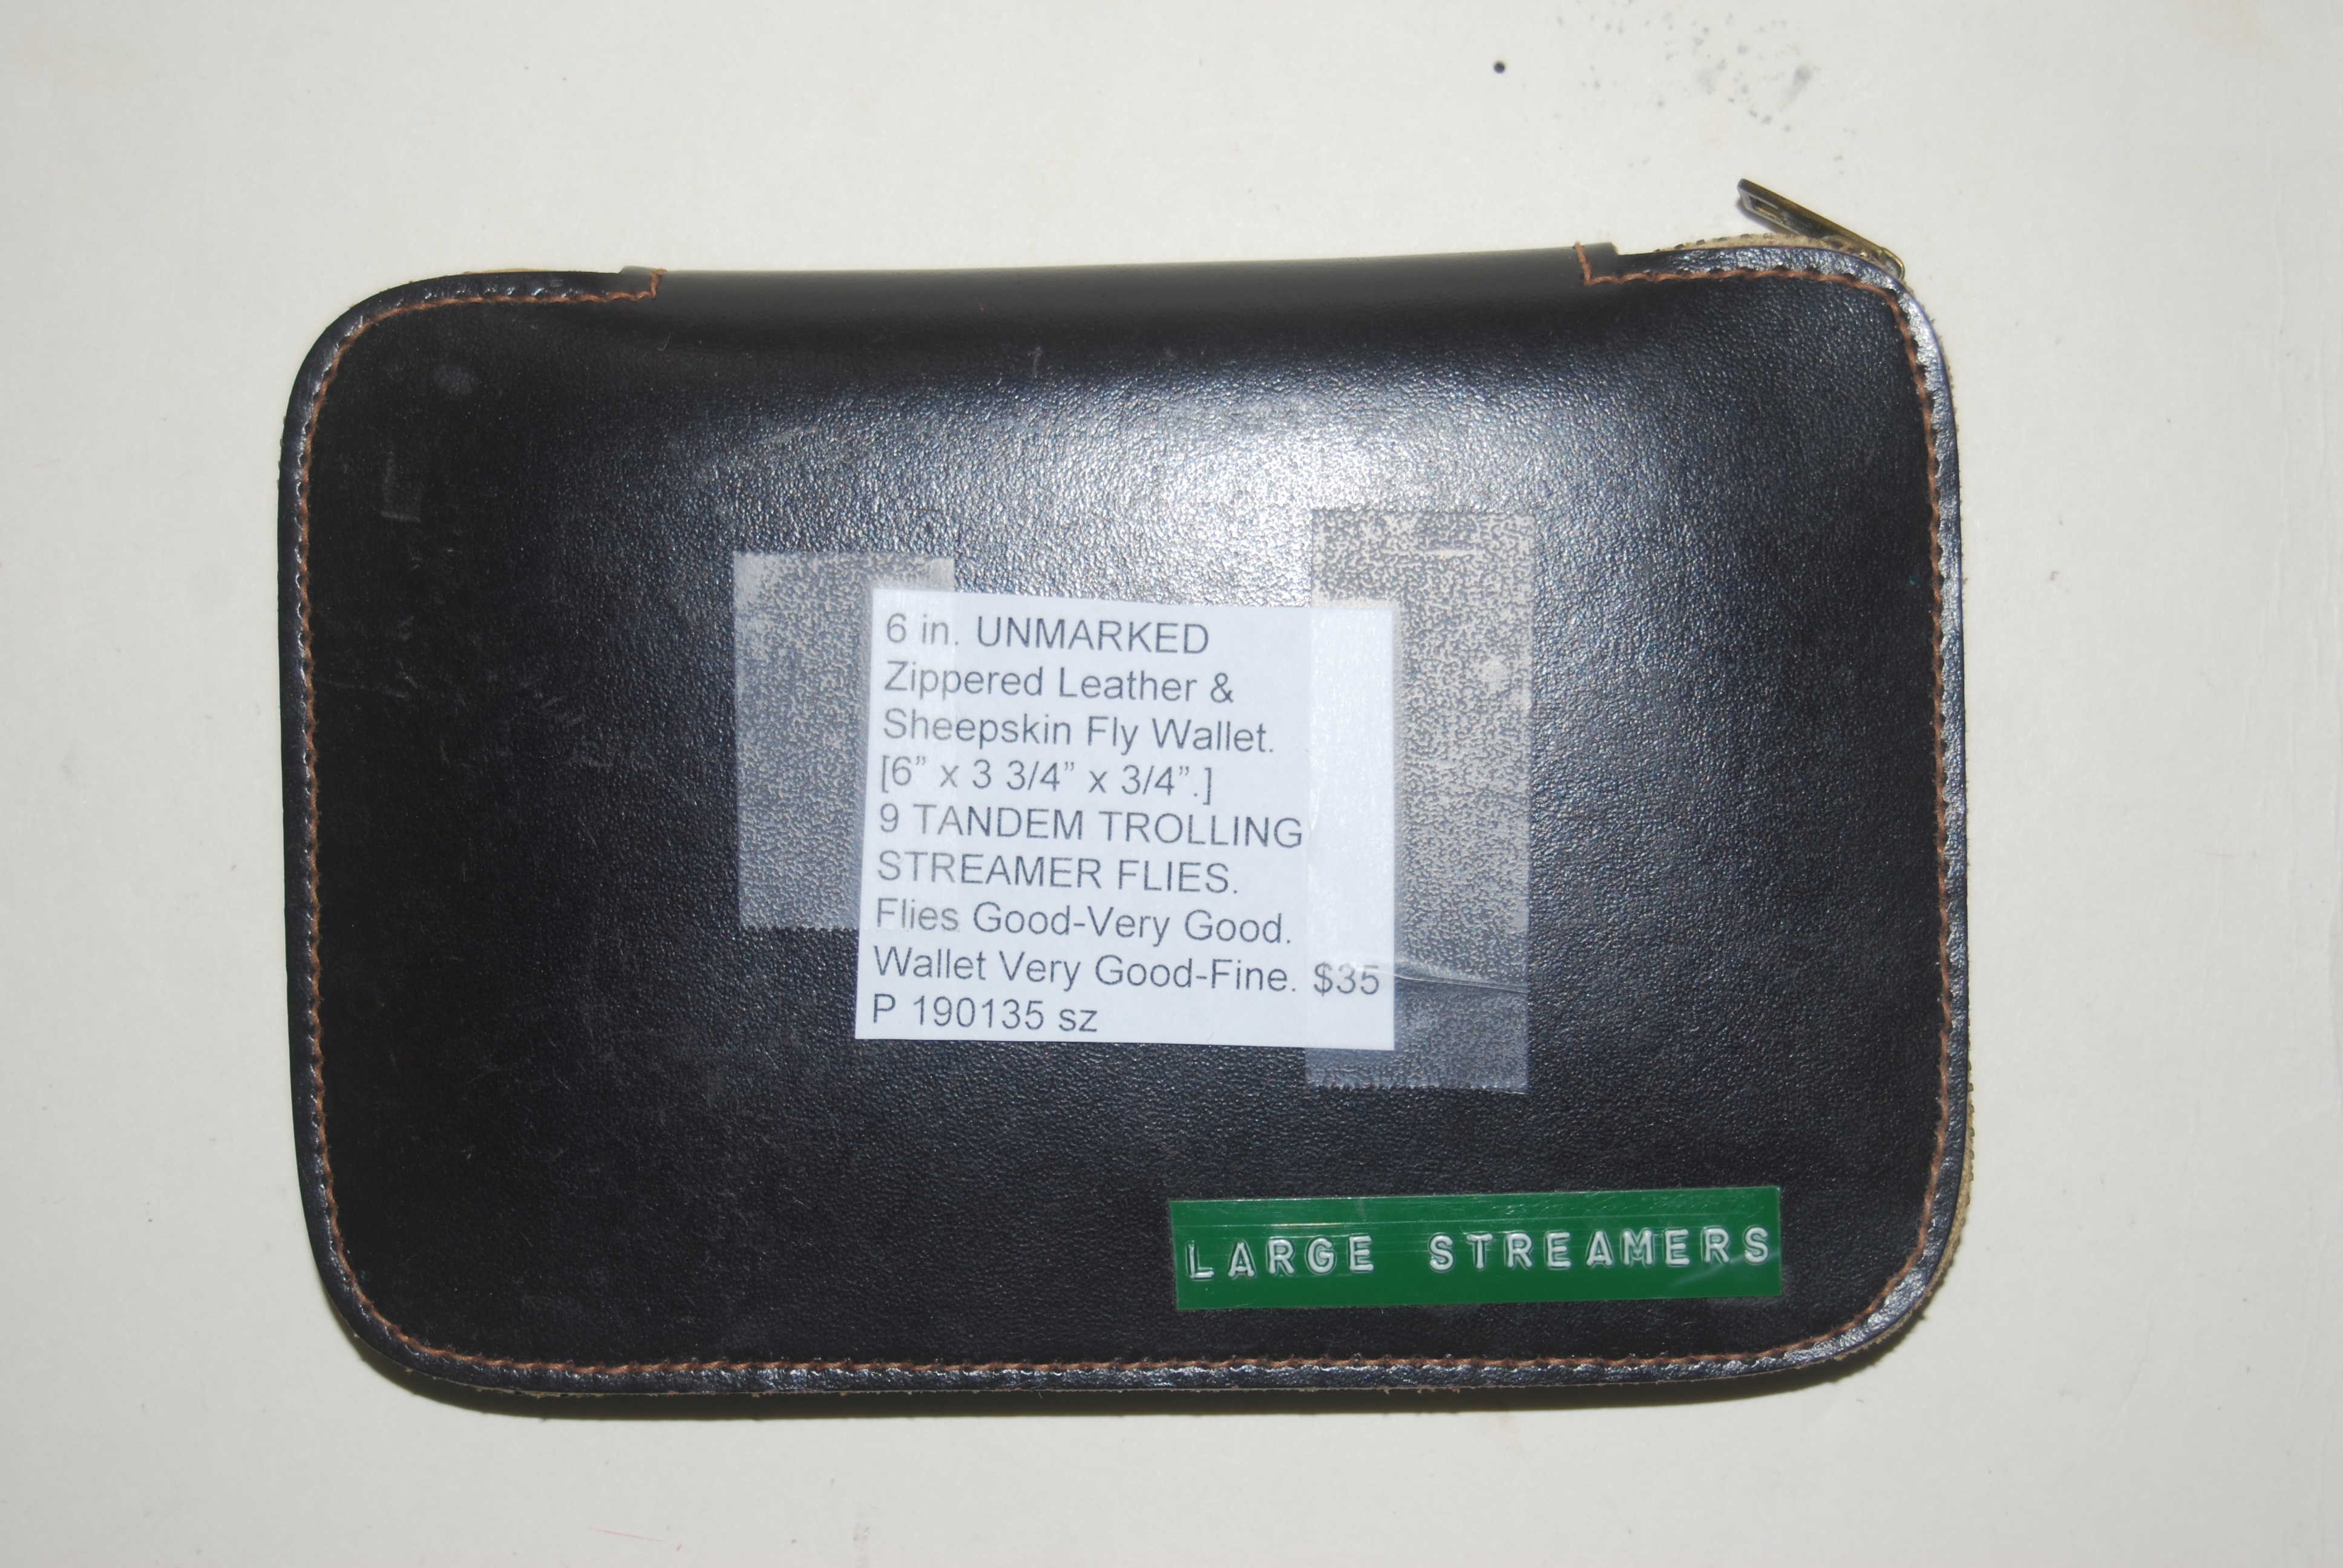 6 in. UNMARKED Zippered Leather & Sheepskin Fly Wallet. [6” x 3 3/4” x